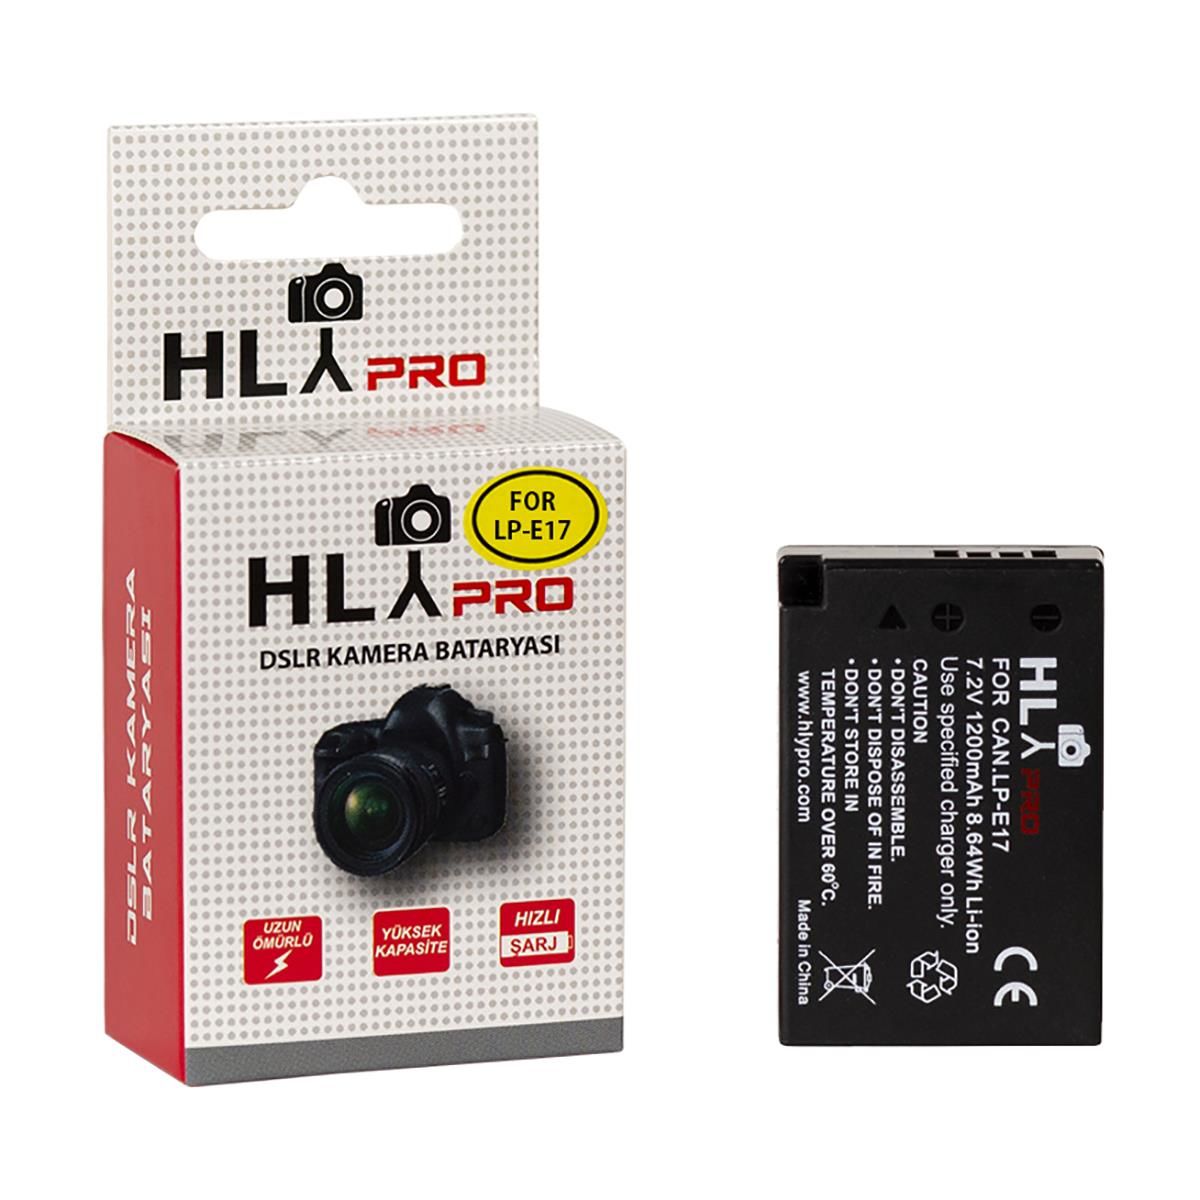 Hlypro Canon 760D için LP-E17 Batarya